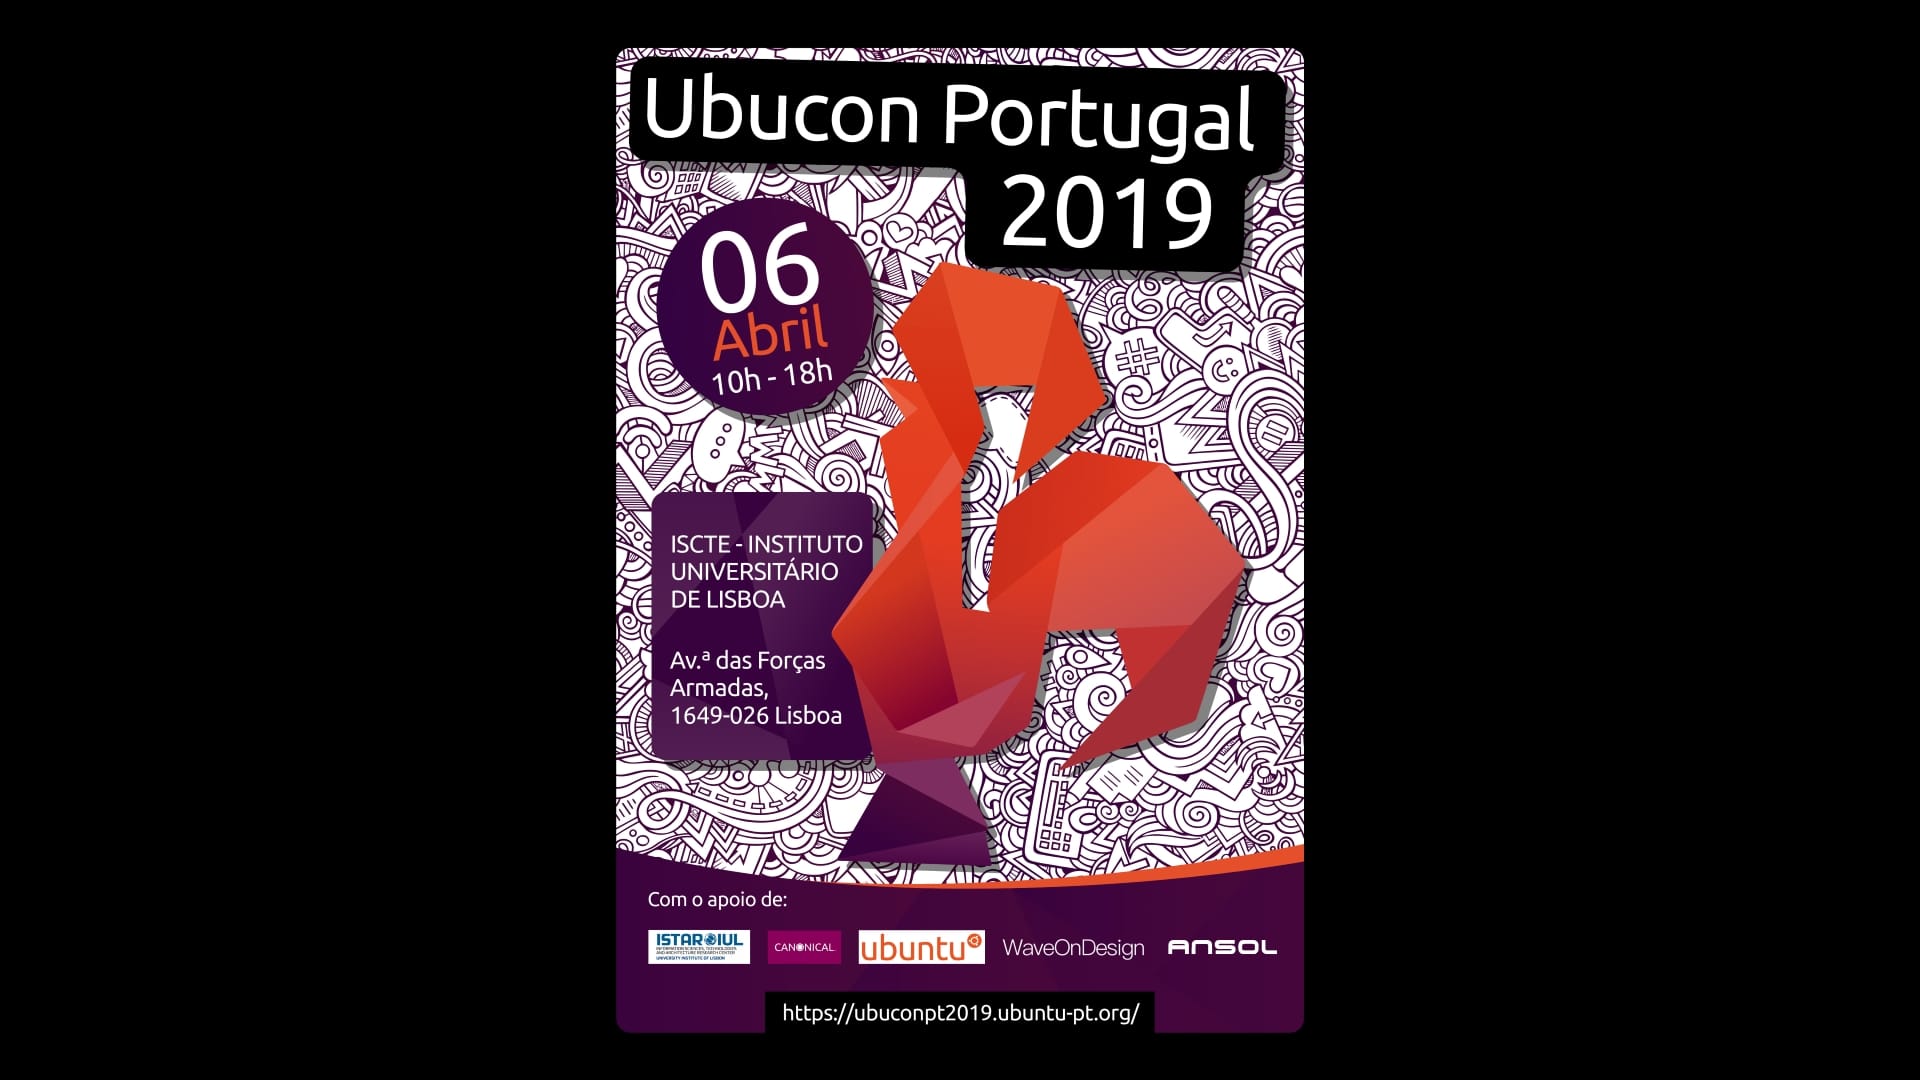 Ubucon Portugal 2019 New